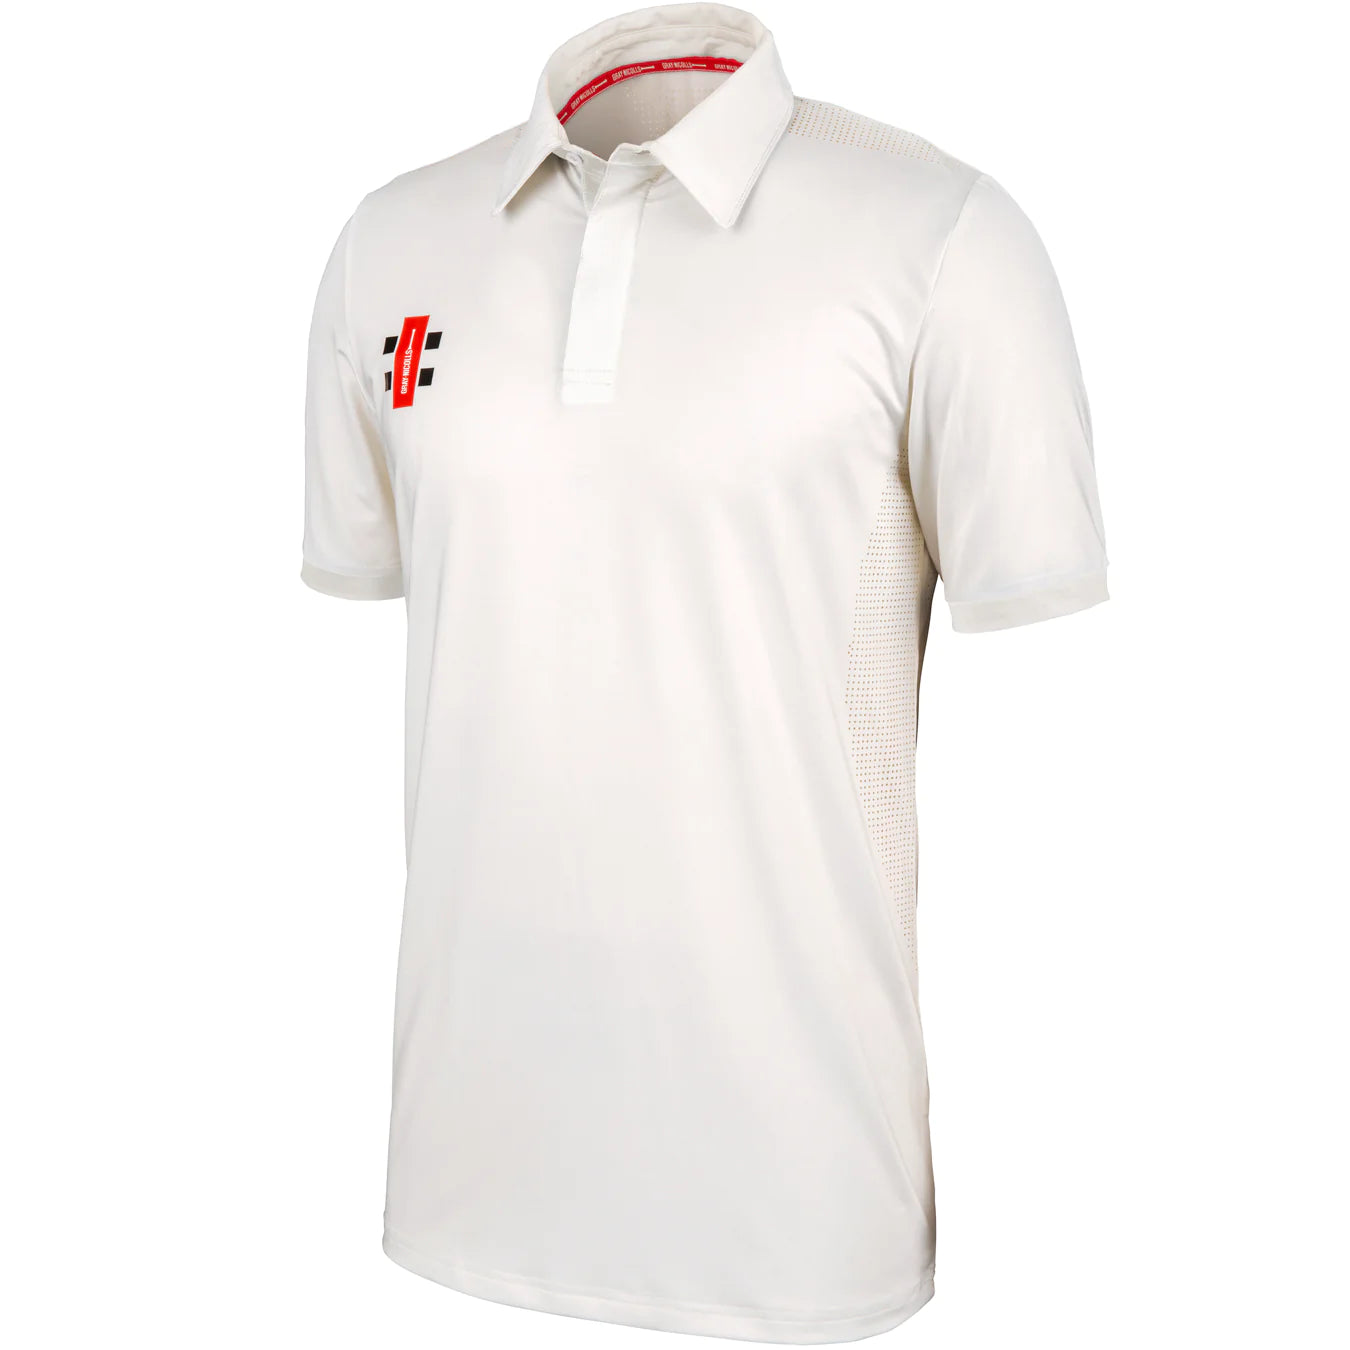 Gray-Nicolls Pro Performance Cricket Short Sleeve Shirt